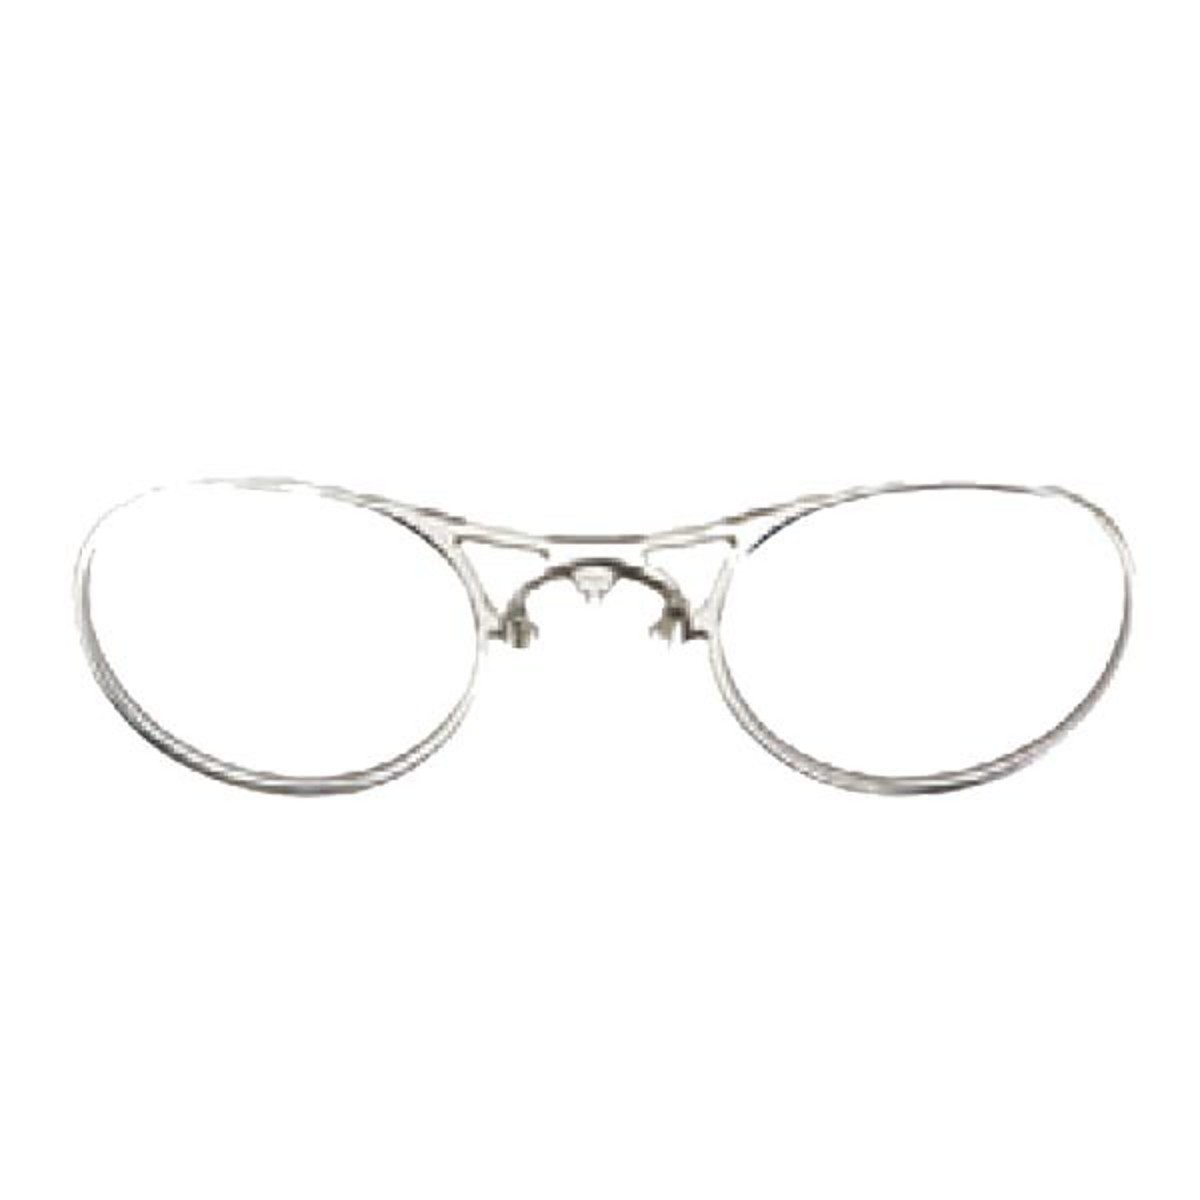 Protos optical glasses insert